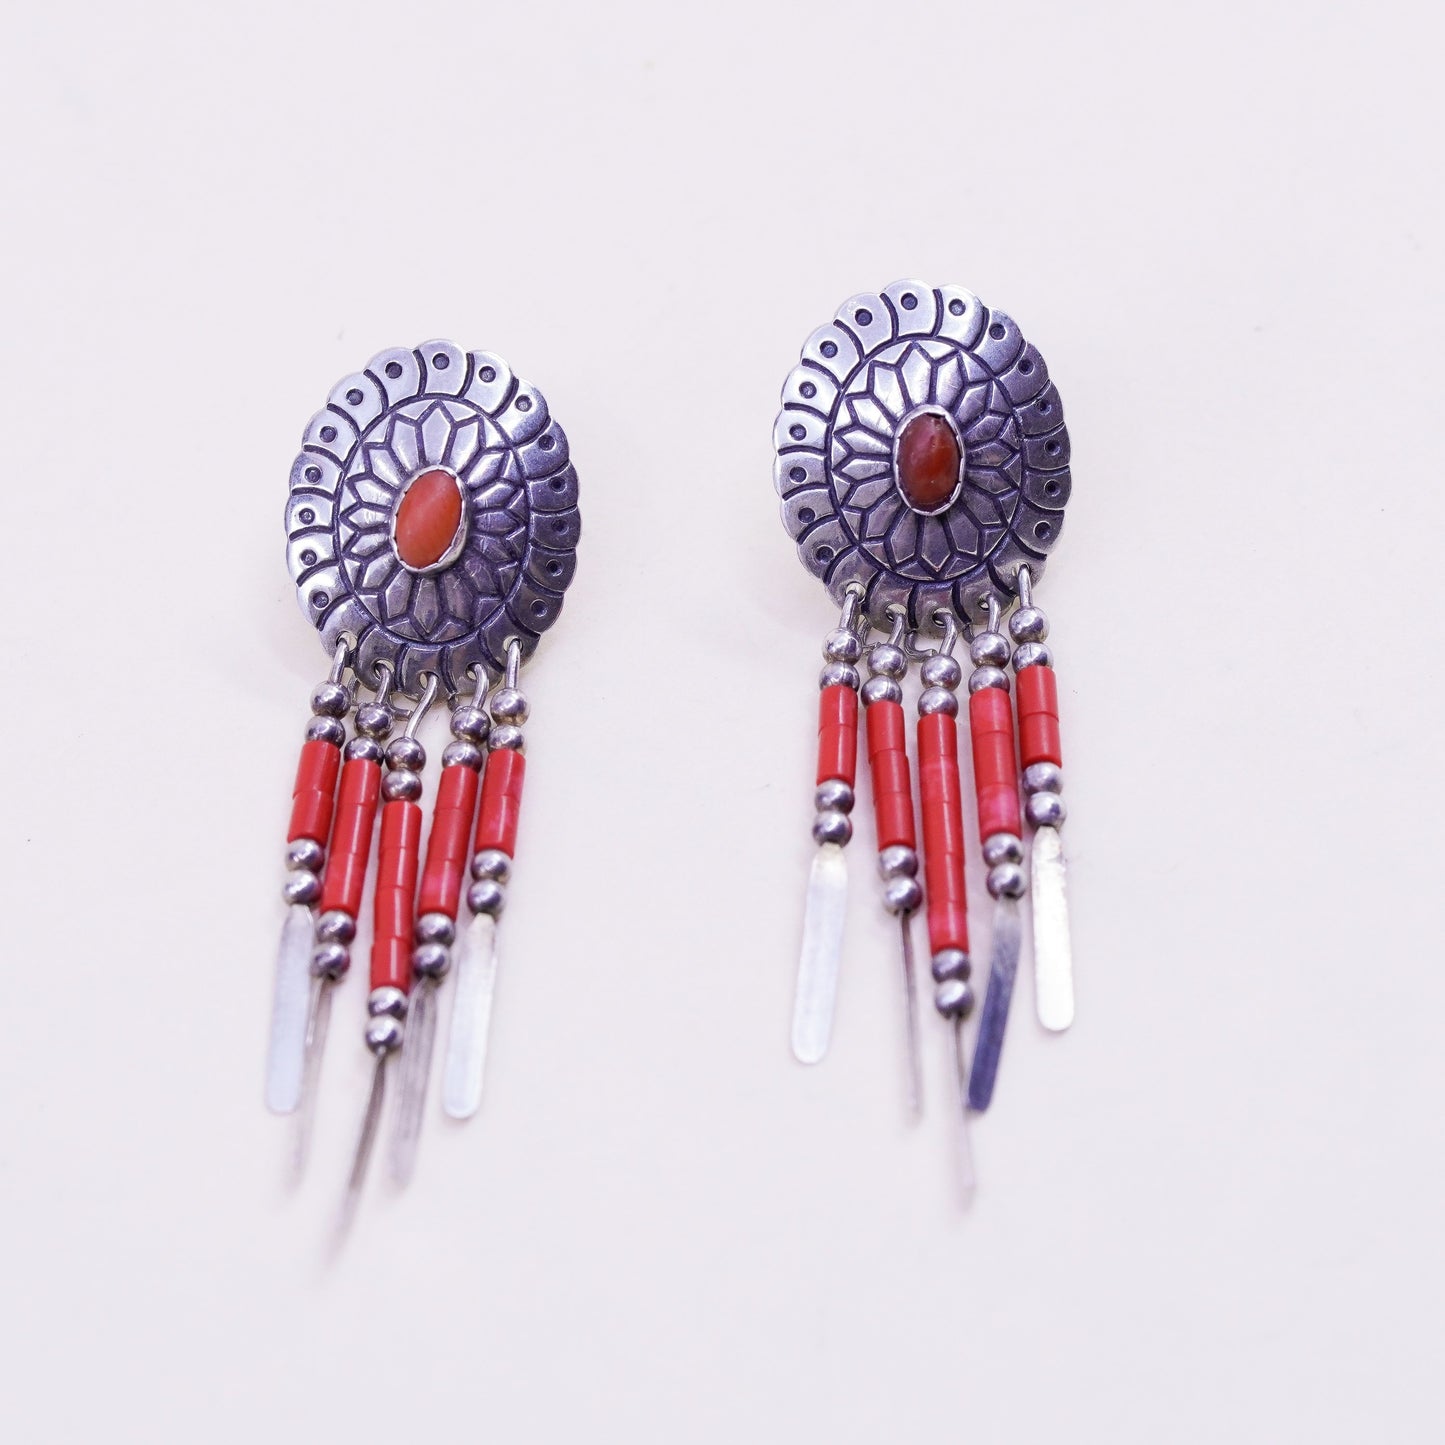 TK Sterling silver earrings, Native American 925 oval coral studs beaded fringe